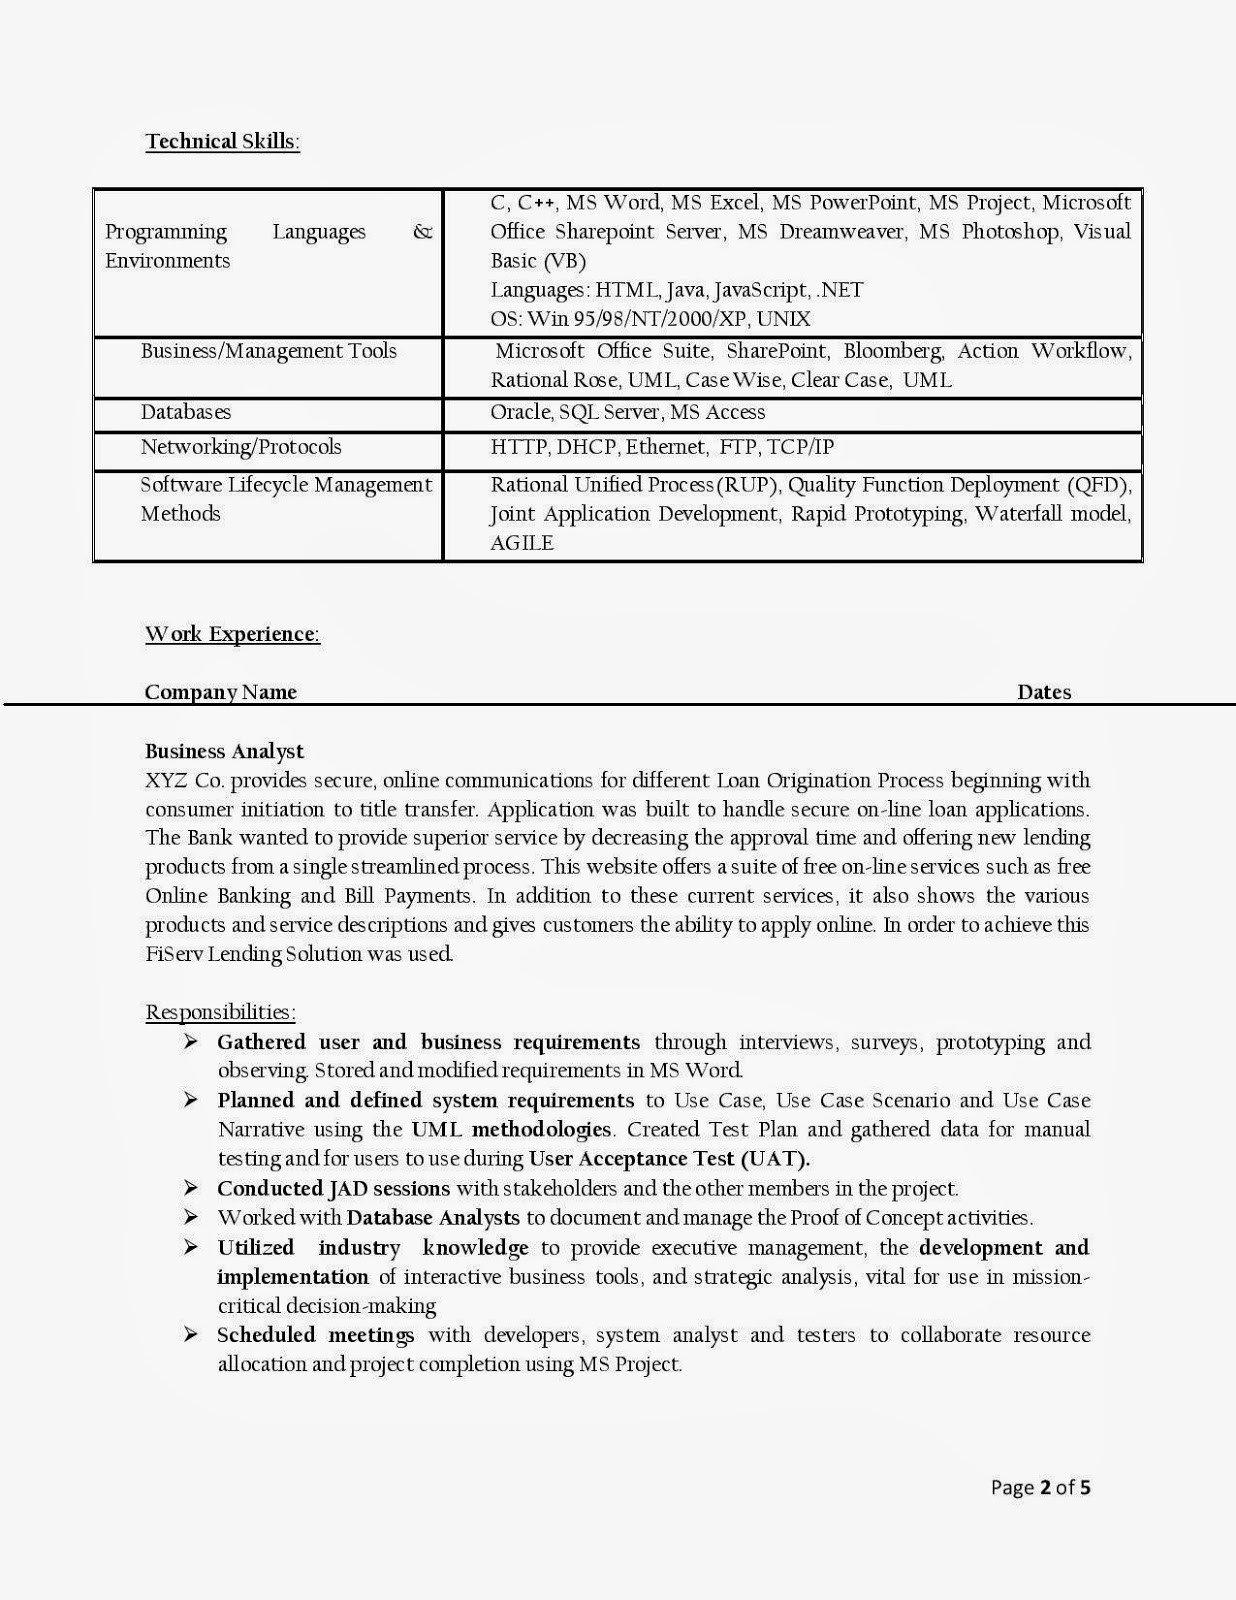 Sample Resume for H1b Visa Application H1b Resume Sample October 2021